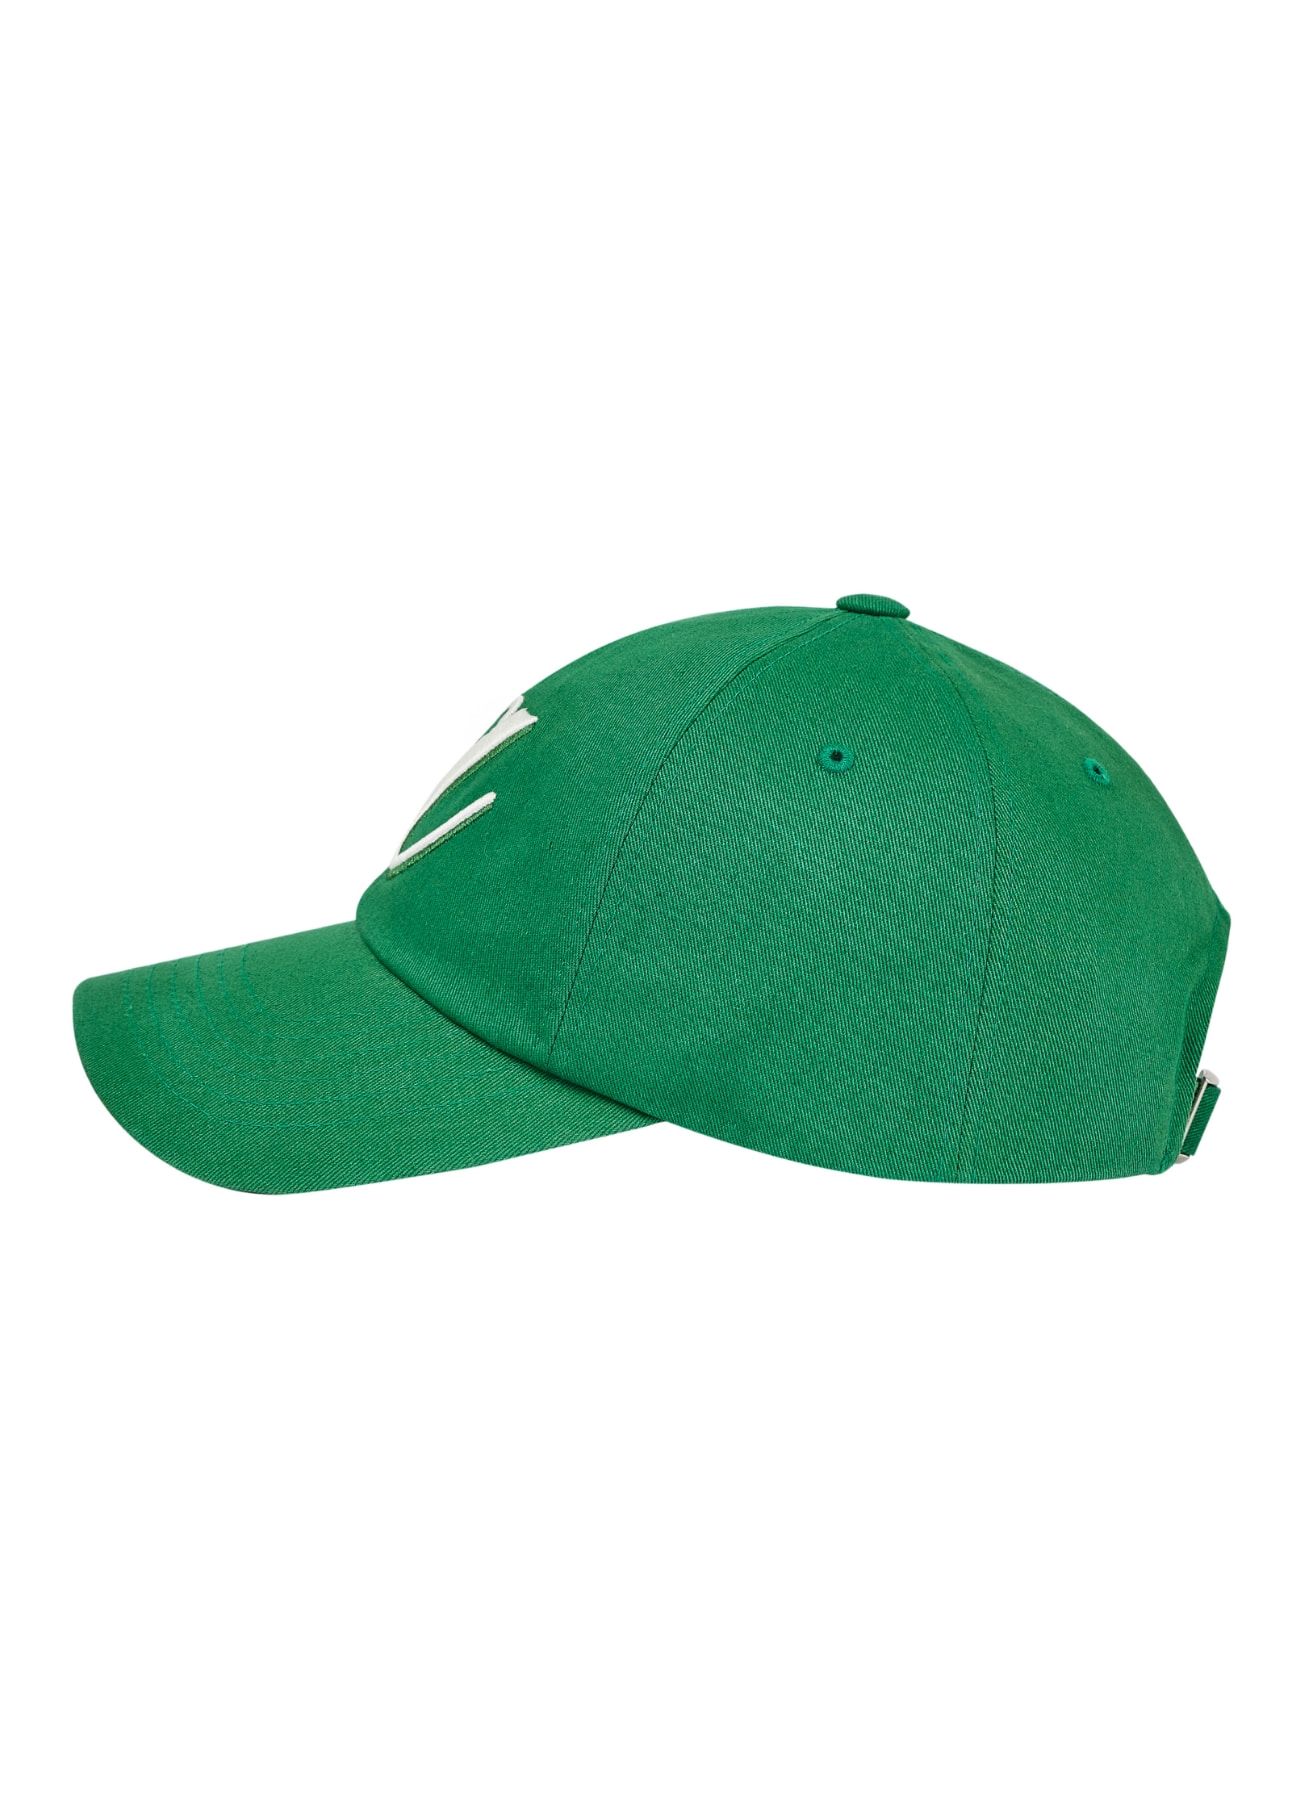 A LOGO BALL CAP GREEN